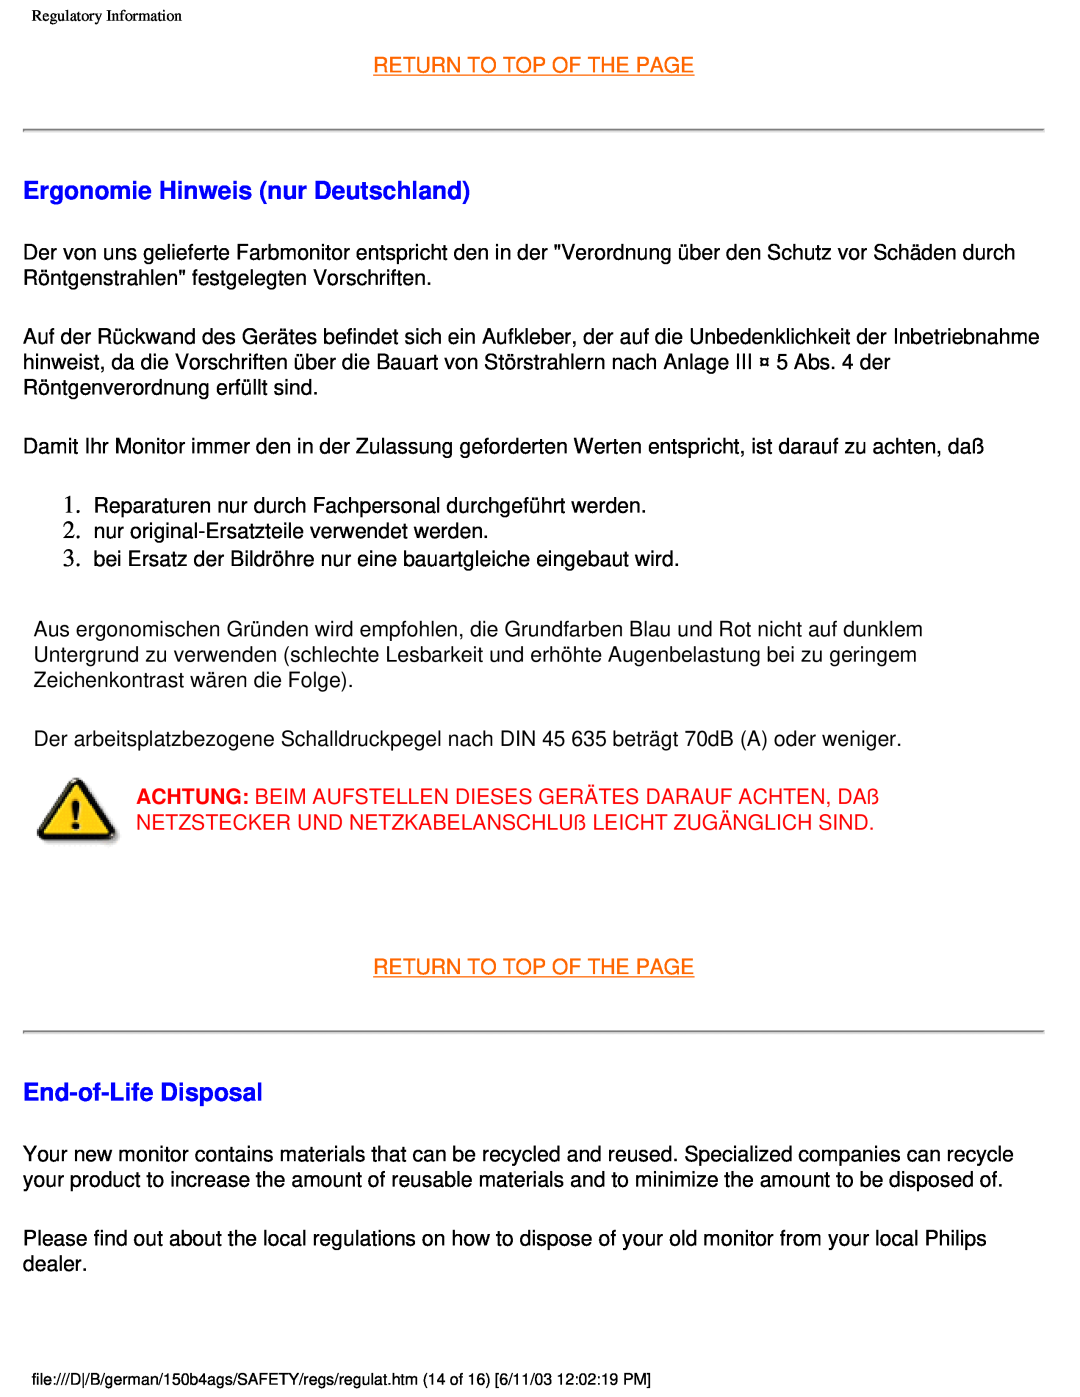 Philips 150B4AG user manual Ergonomie Hinweis nur Deutschland, End-of-LifeDisposal, Return To Top Of The Page 